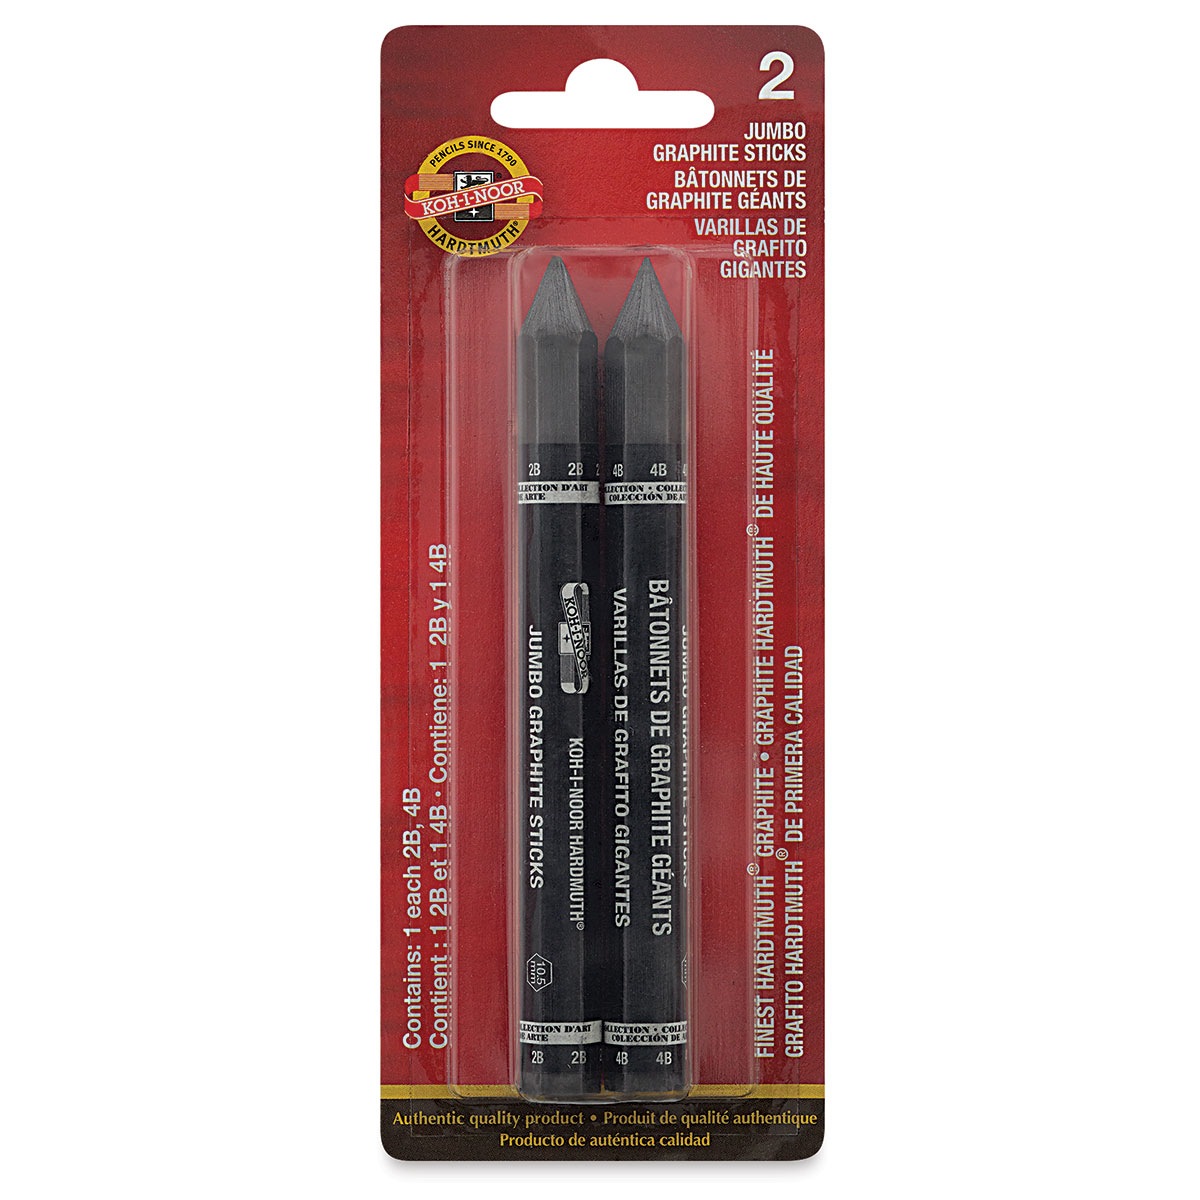 Jumbo Graphite Pencil Stick Woodless Thick Set Koh-i-noor Progresso 8971 